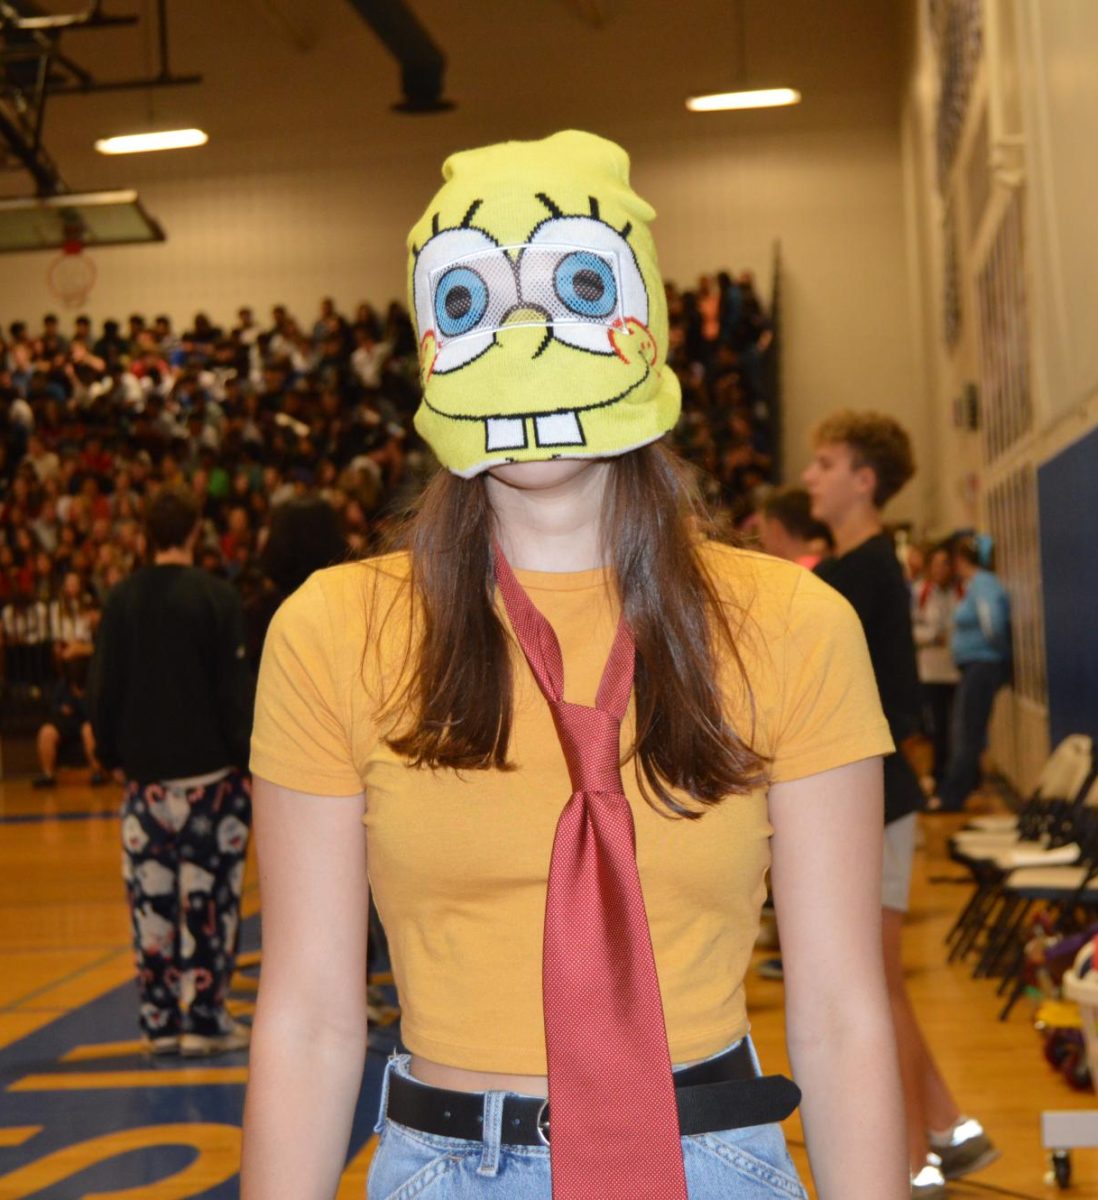 Ellia Nickerson in SpongeBob attire.